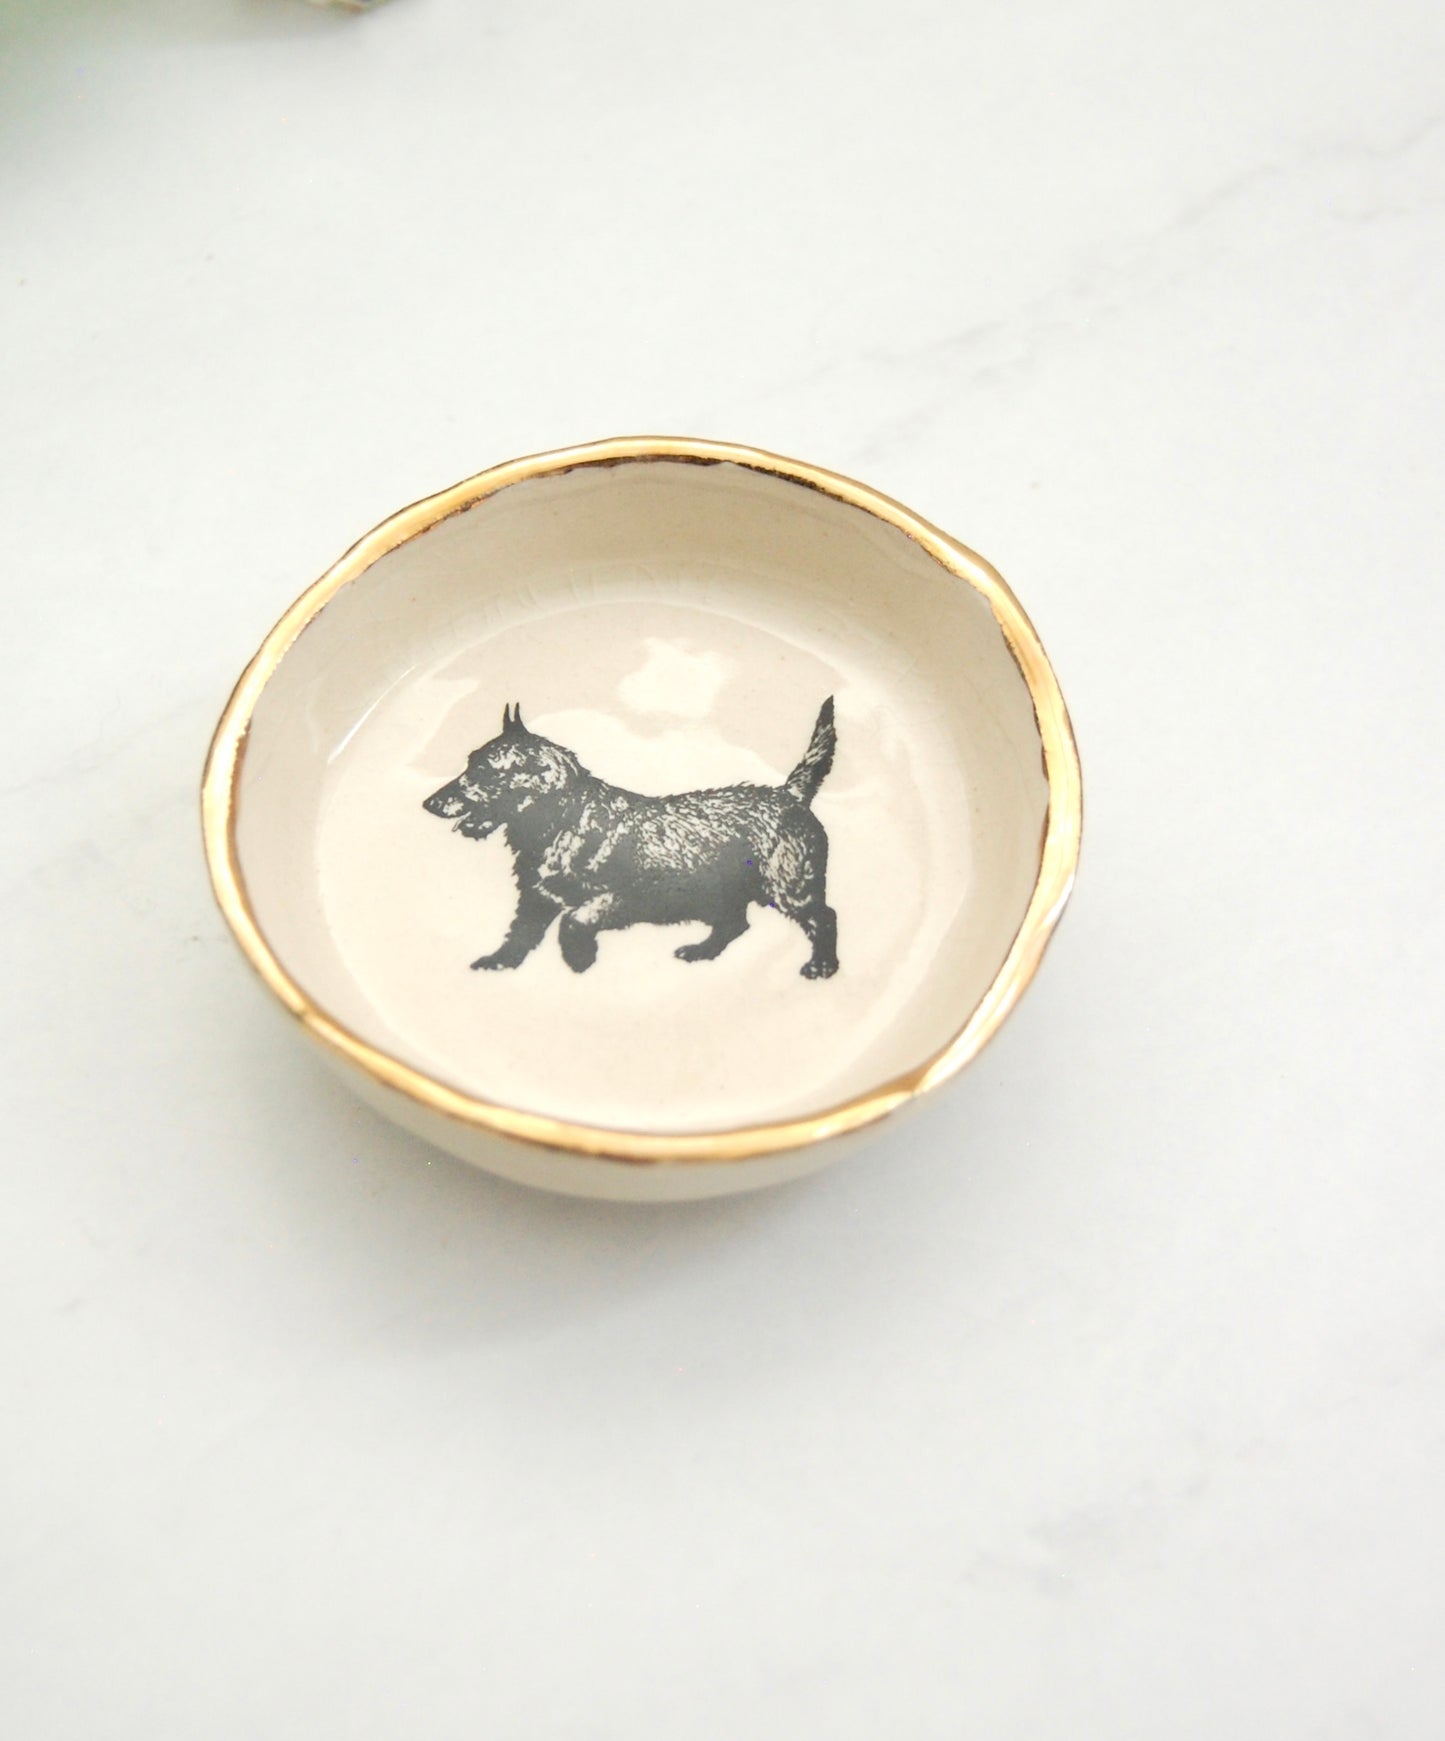 Scottish Terrier : Tiny Decor Dish